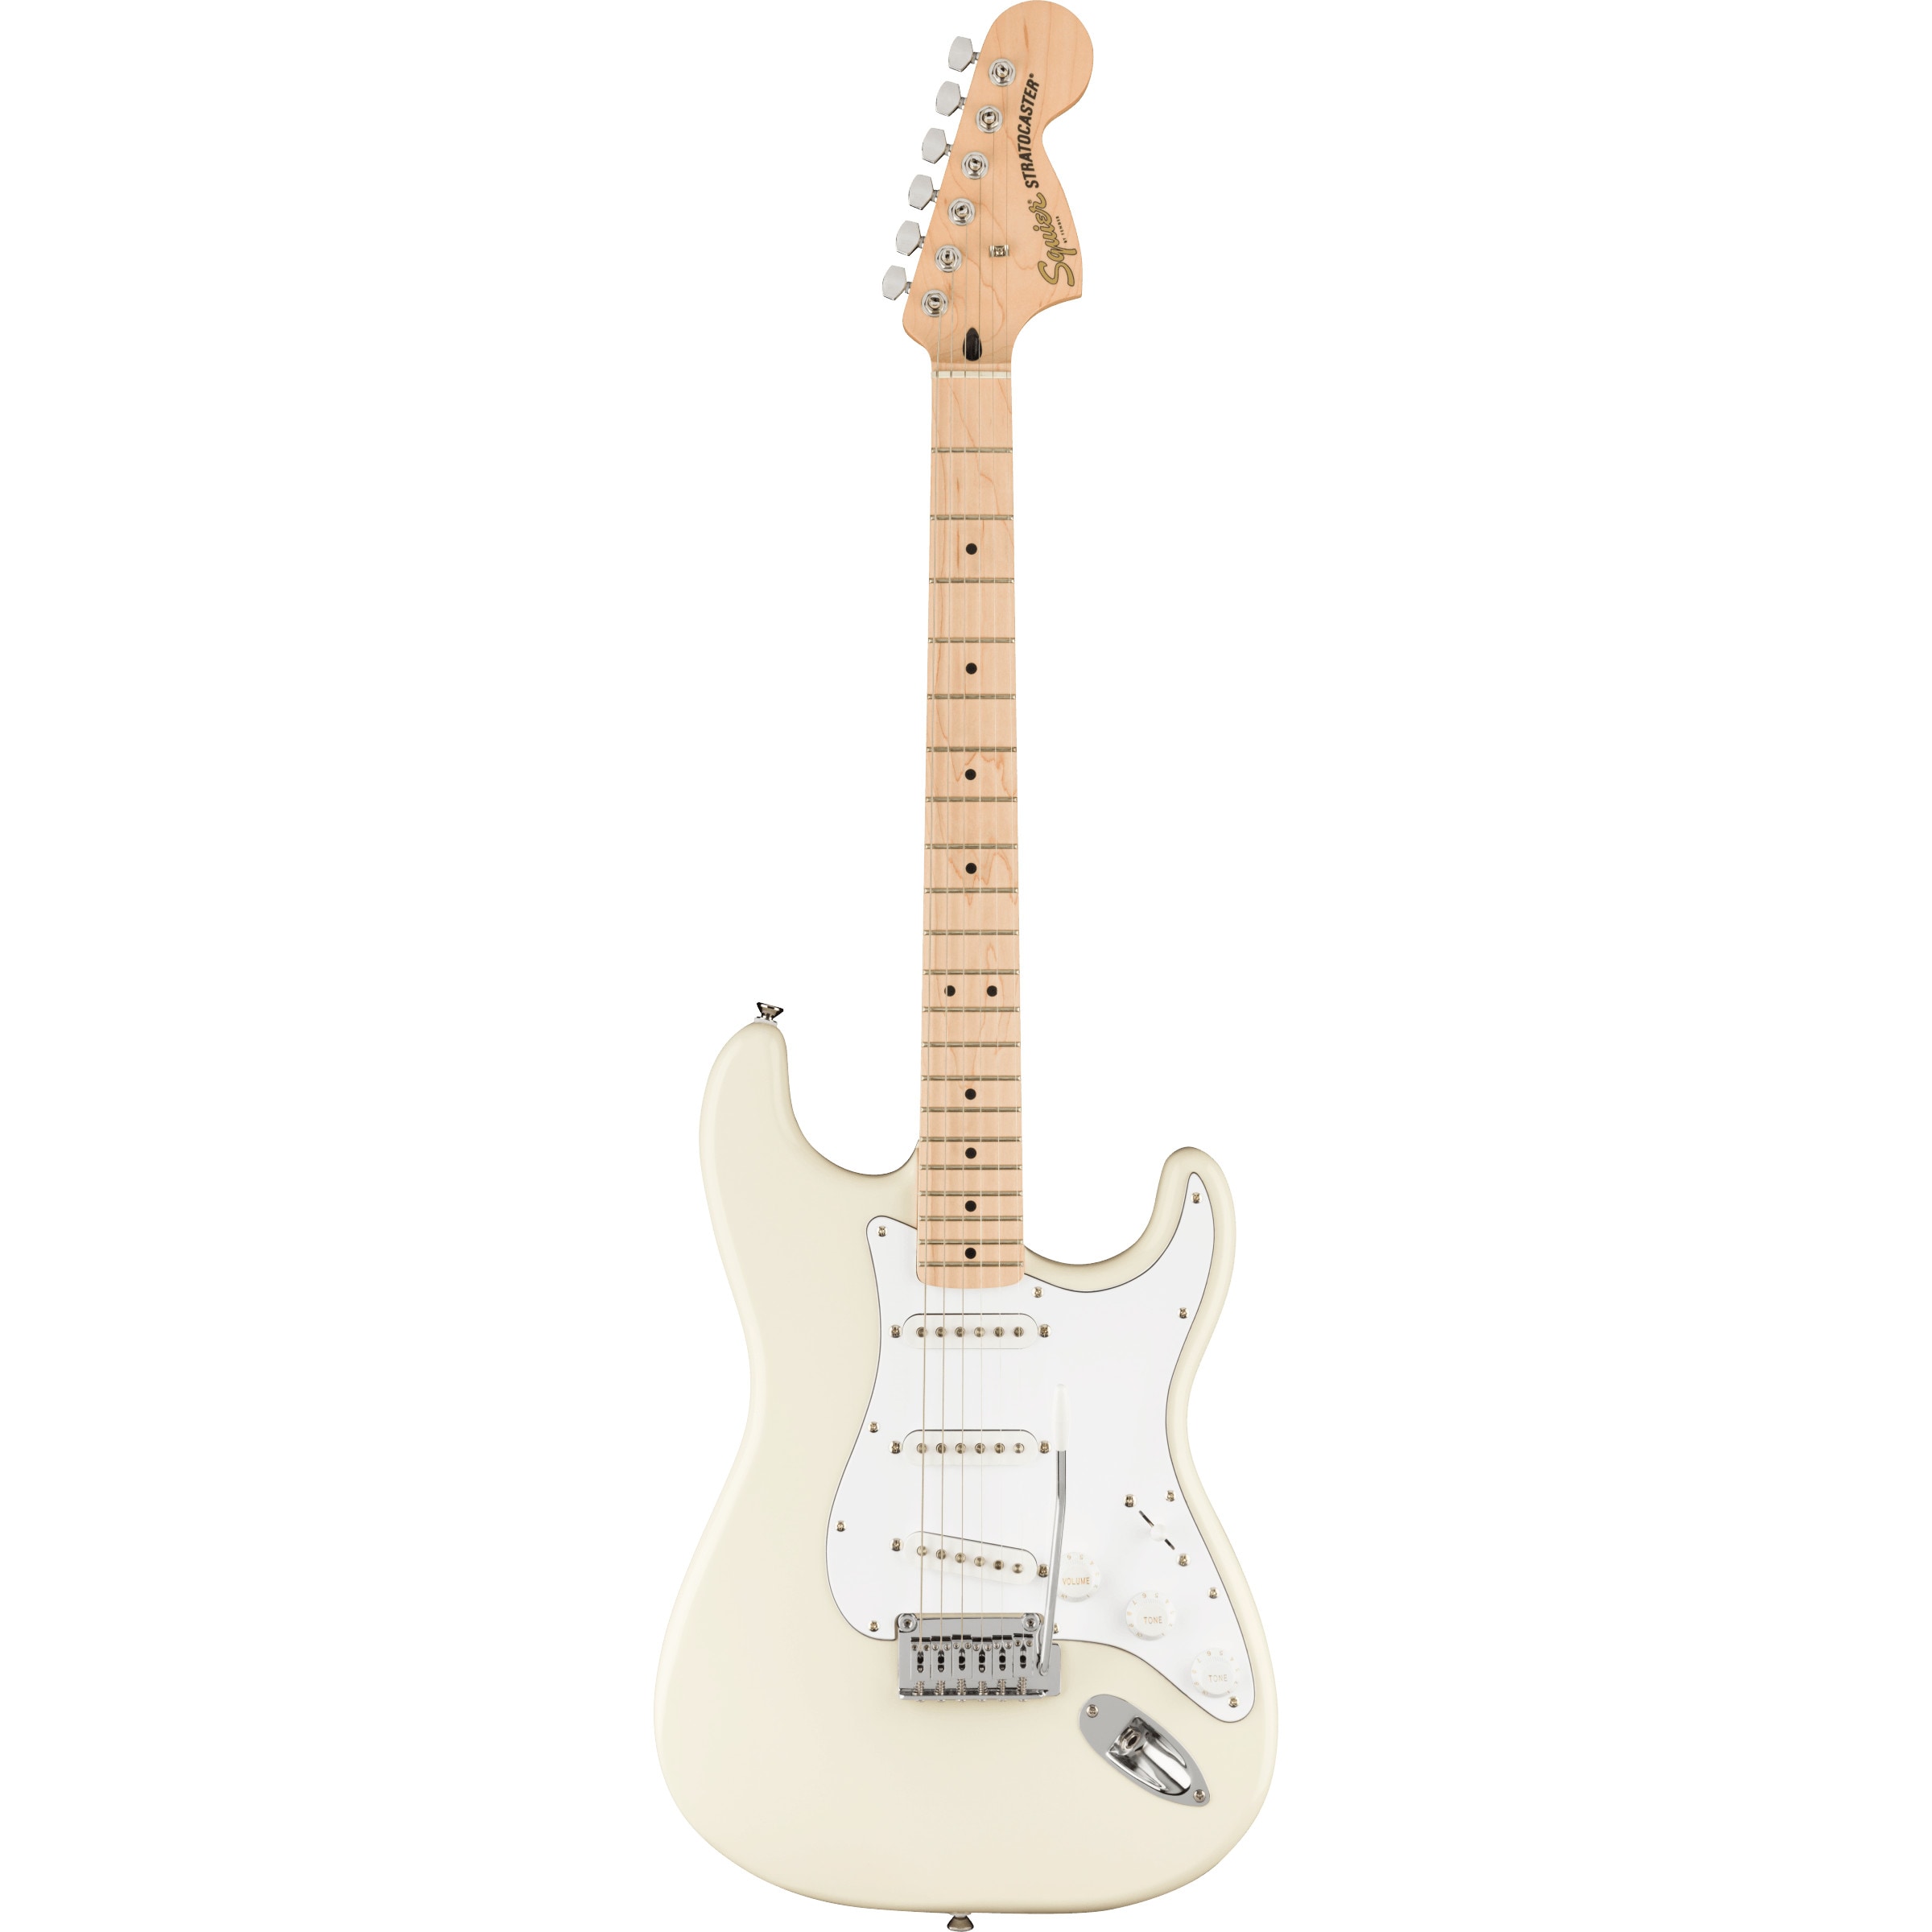 Squier Affinity Series Stratocaster MN Olympic White elektrische gitaar